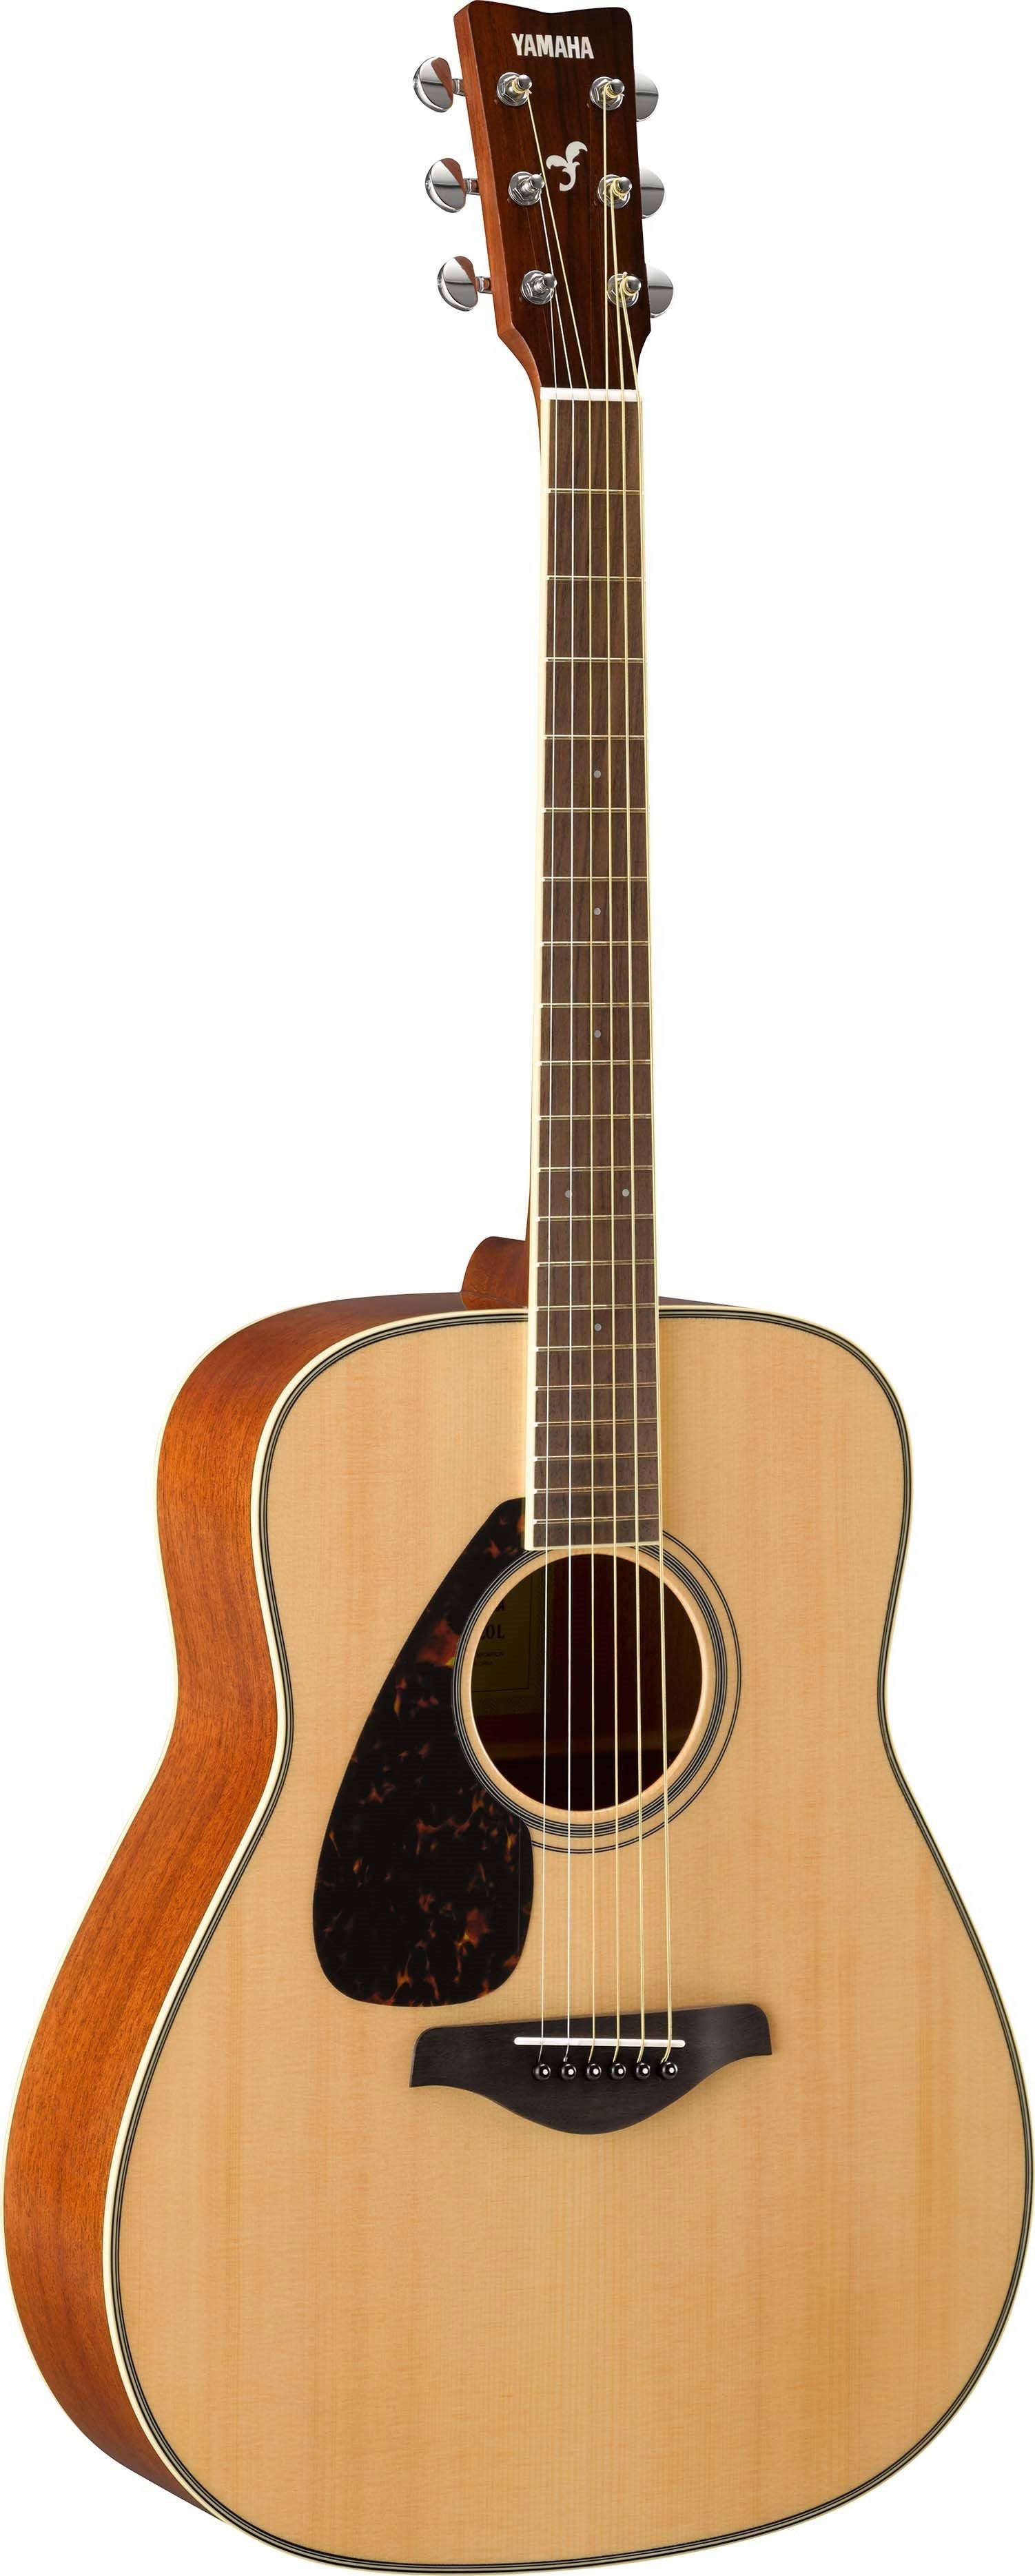 Yamaha FG820L Dreadnought Acoustic Guitar - Natural, Left-Handed